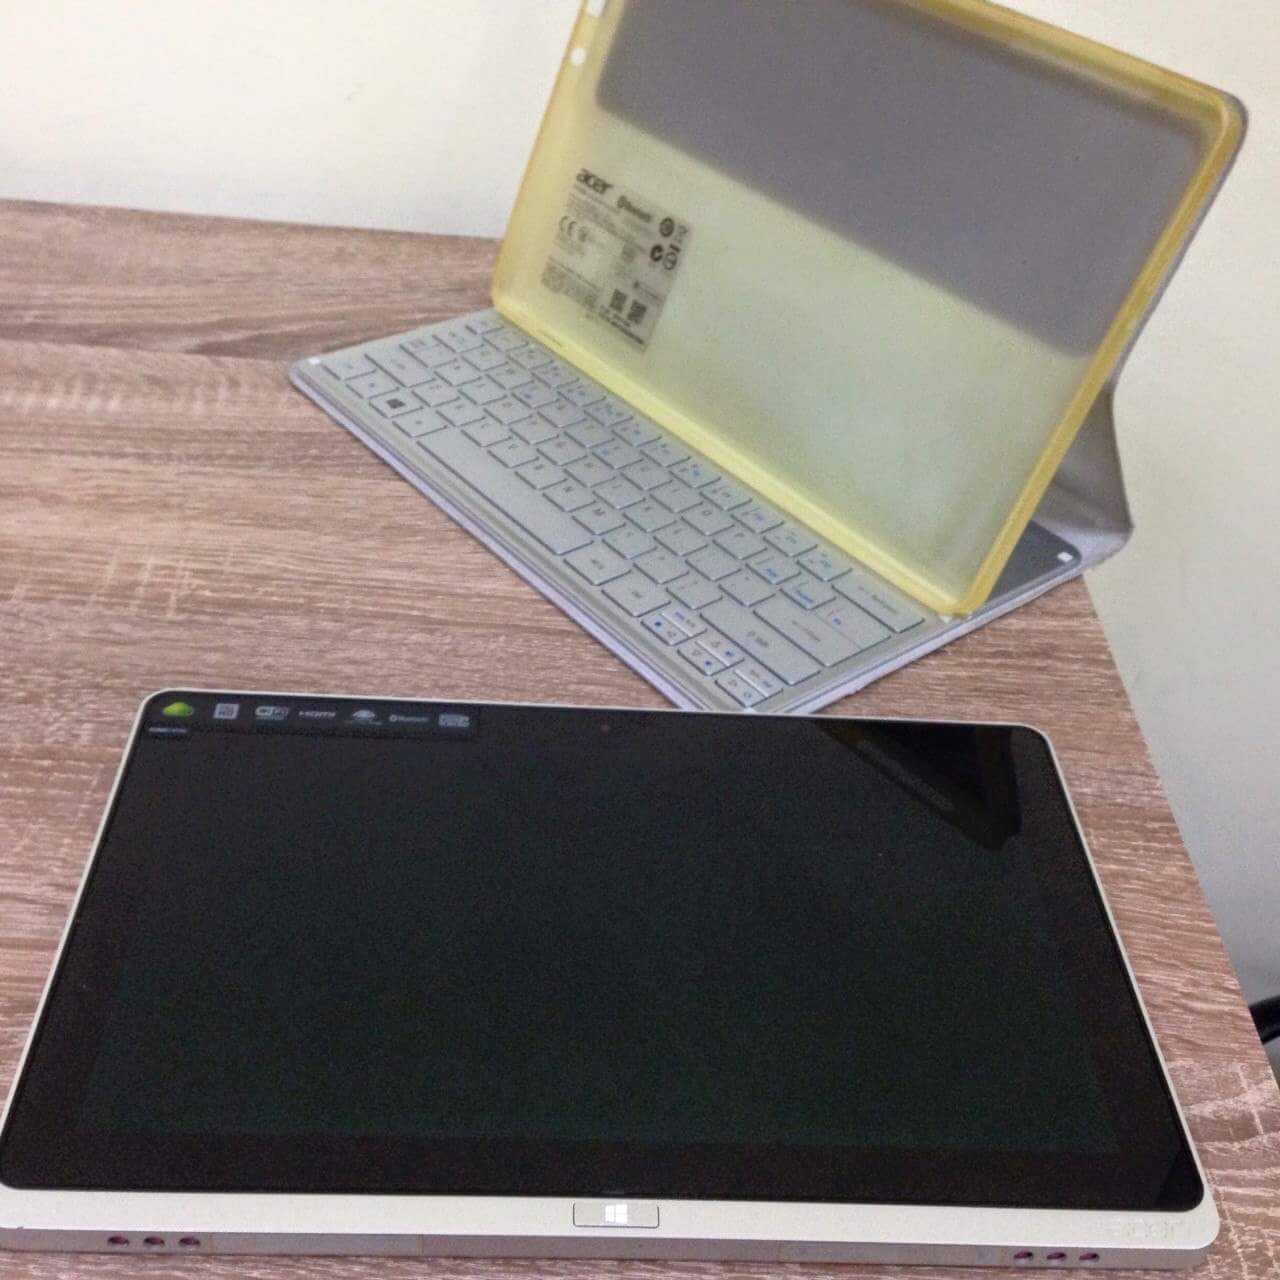 Acer iconia tab w700 128gb (nt.l0qer.002 ) - купить , скидки, цена, отзывы, обзор, характеристики - планшеты